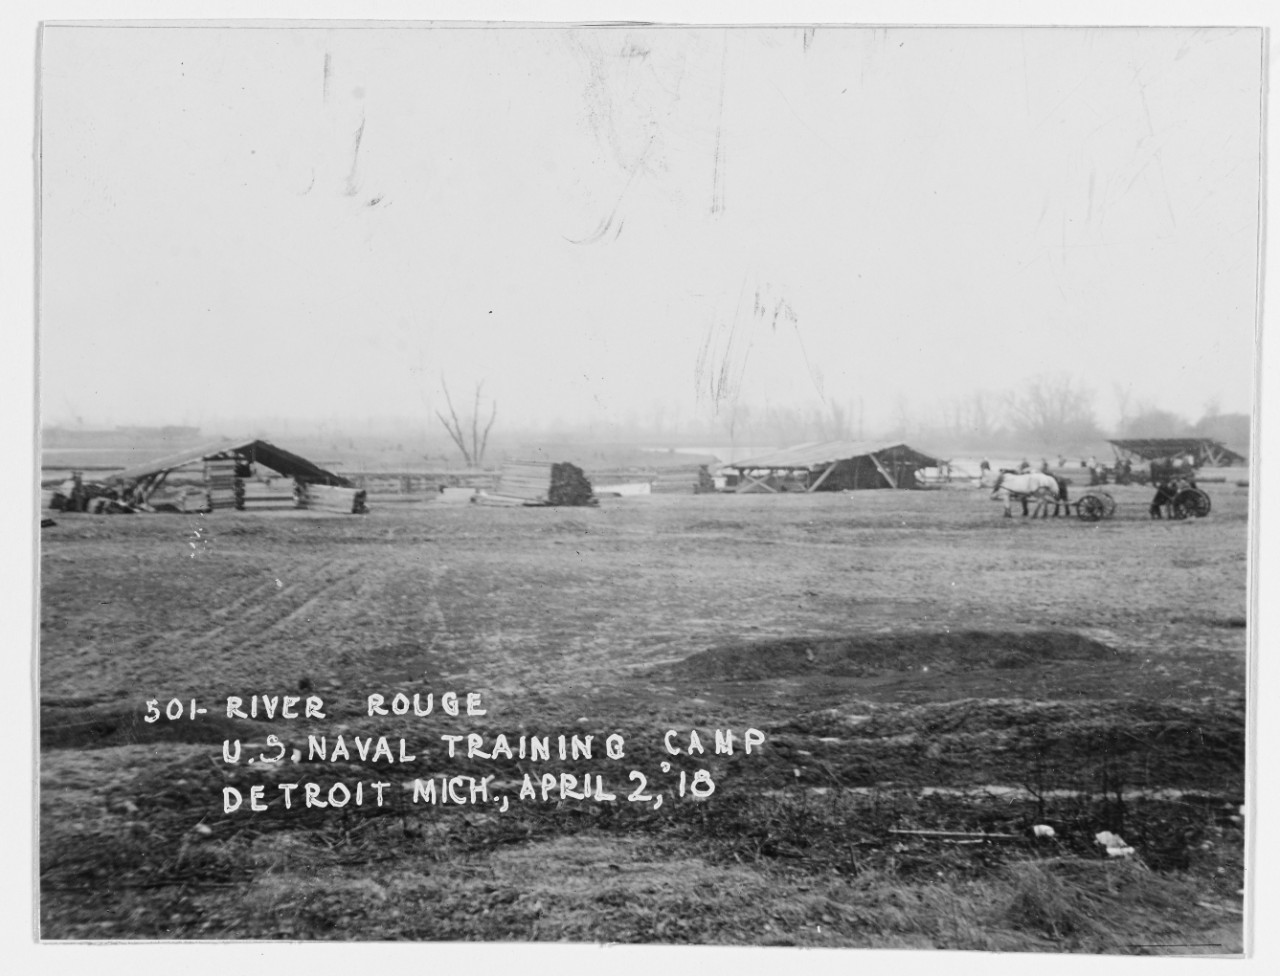 Naval training camp, Detroit, Michigan. 